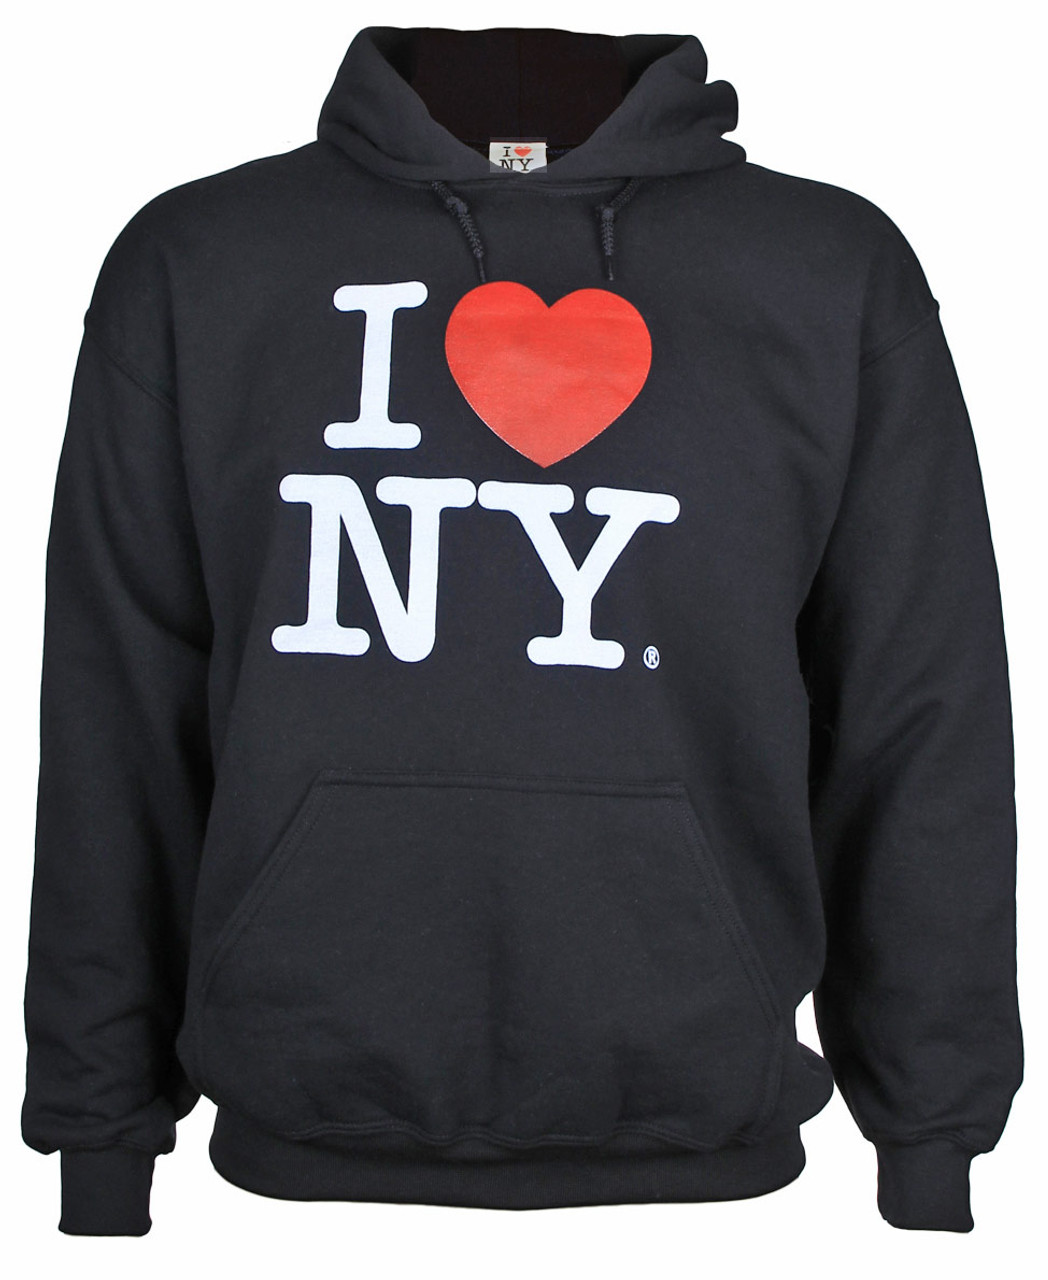 Clothing I Love NY Black Hooded Sweatshirt